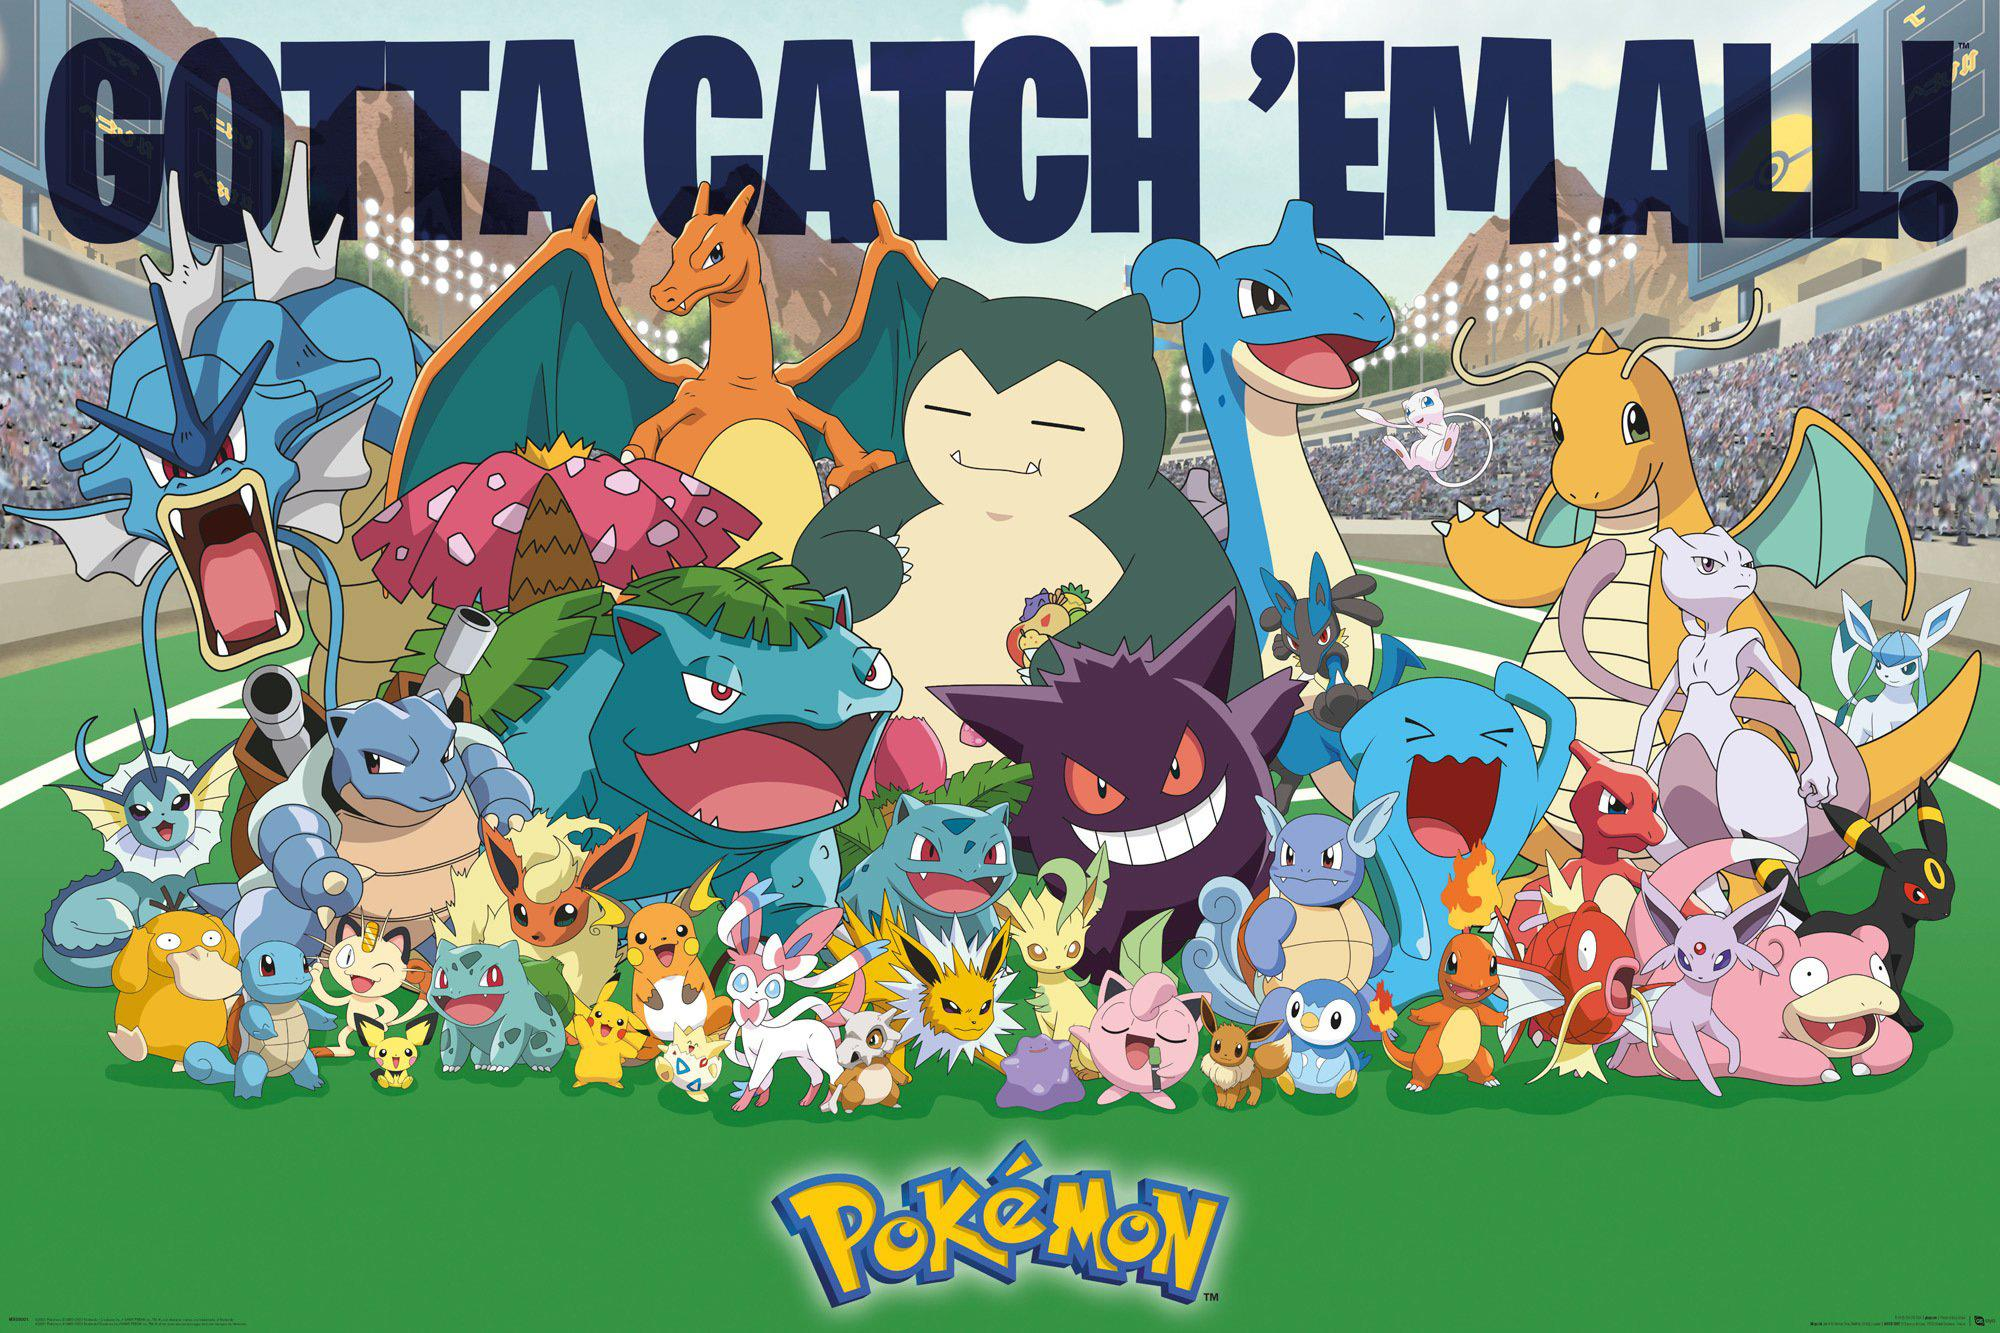 GB Gotta catch \'em Favorites Pokémon all! Poster EYE